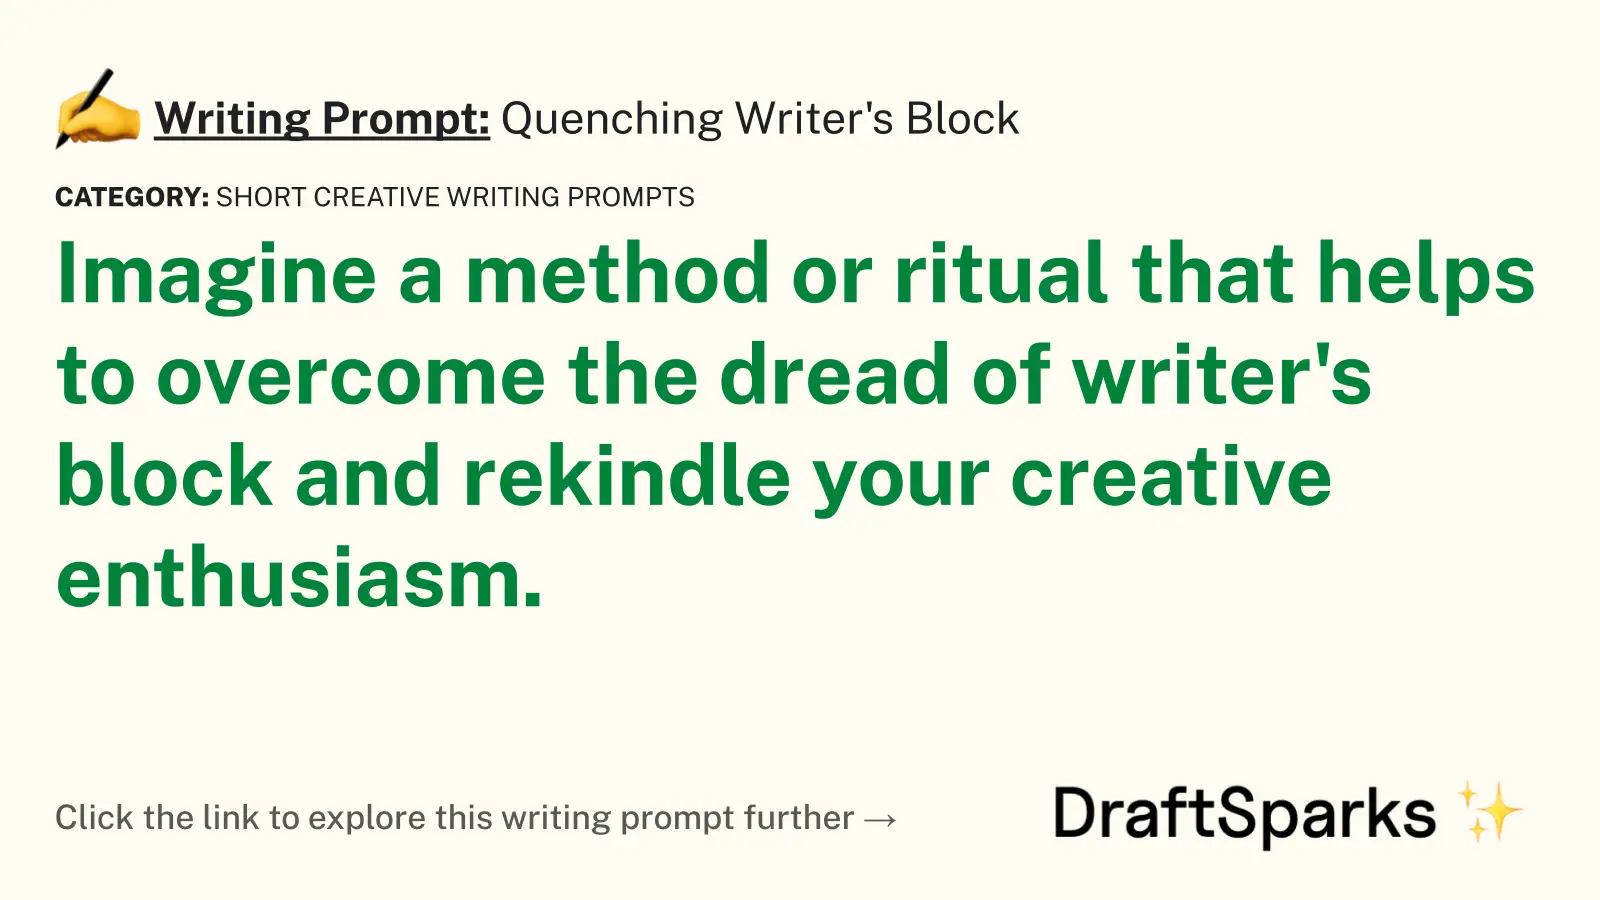 Quenching Writer’s Block